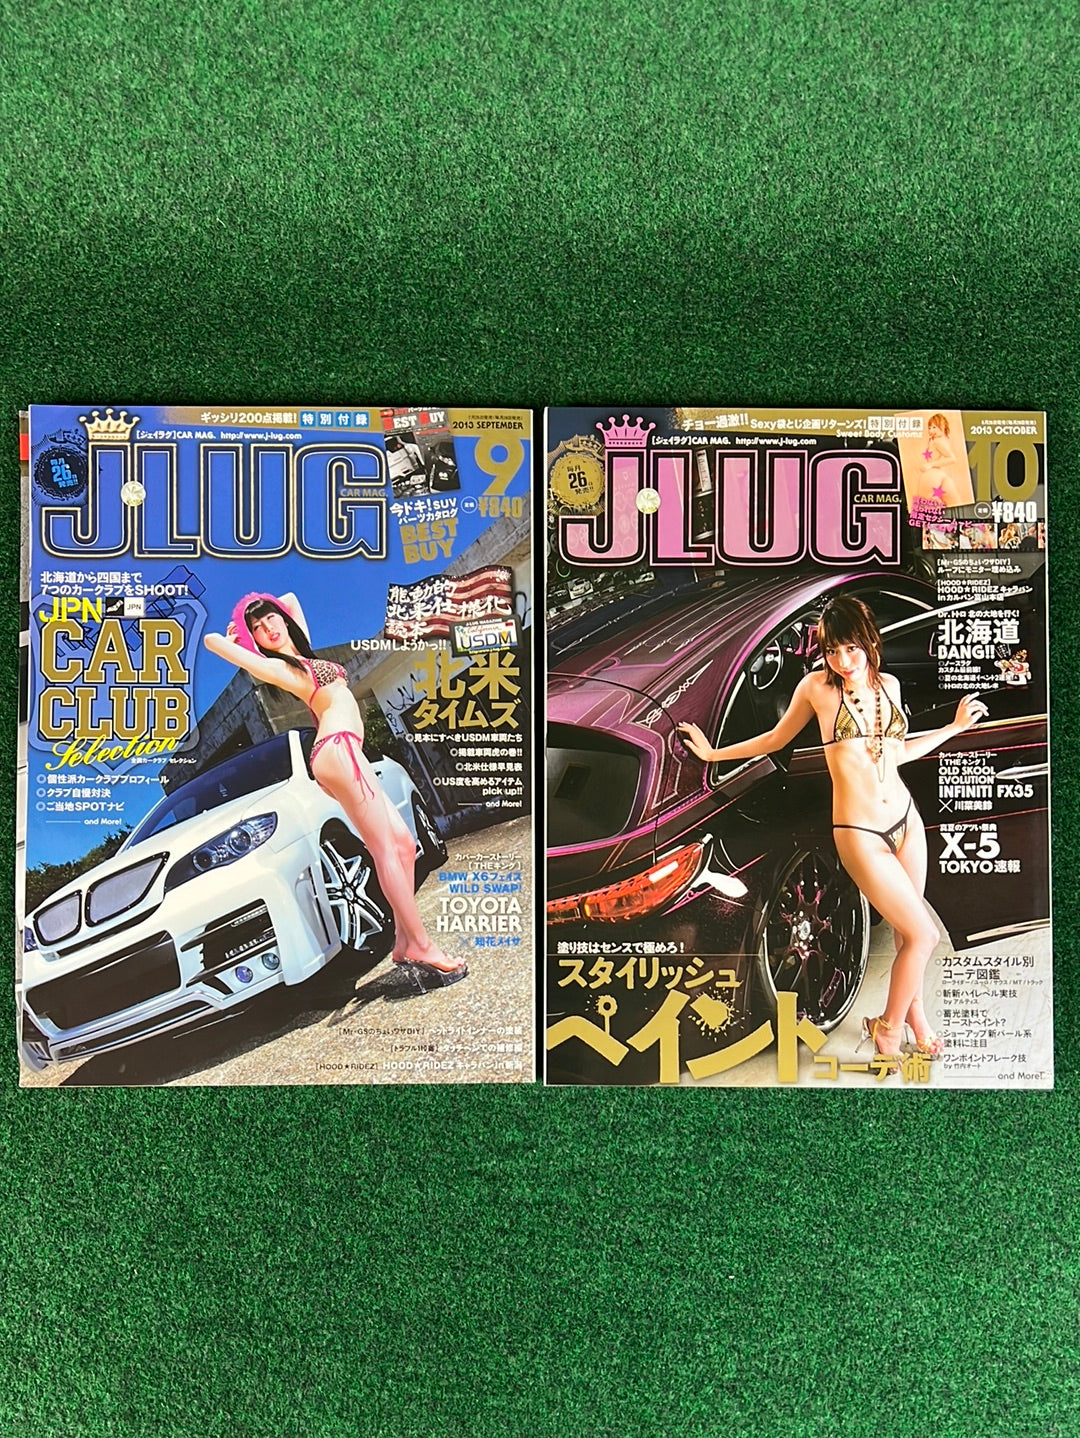 J-LUG Car Magazine - 2013 Sets of 2